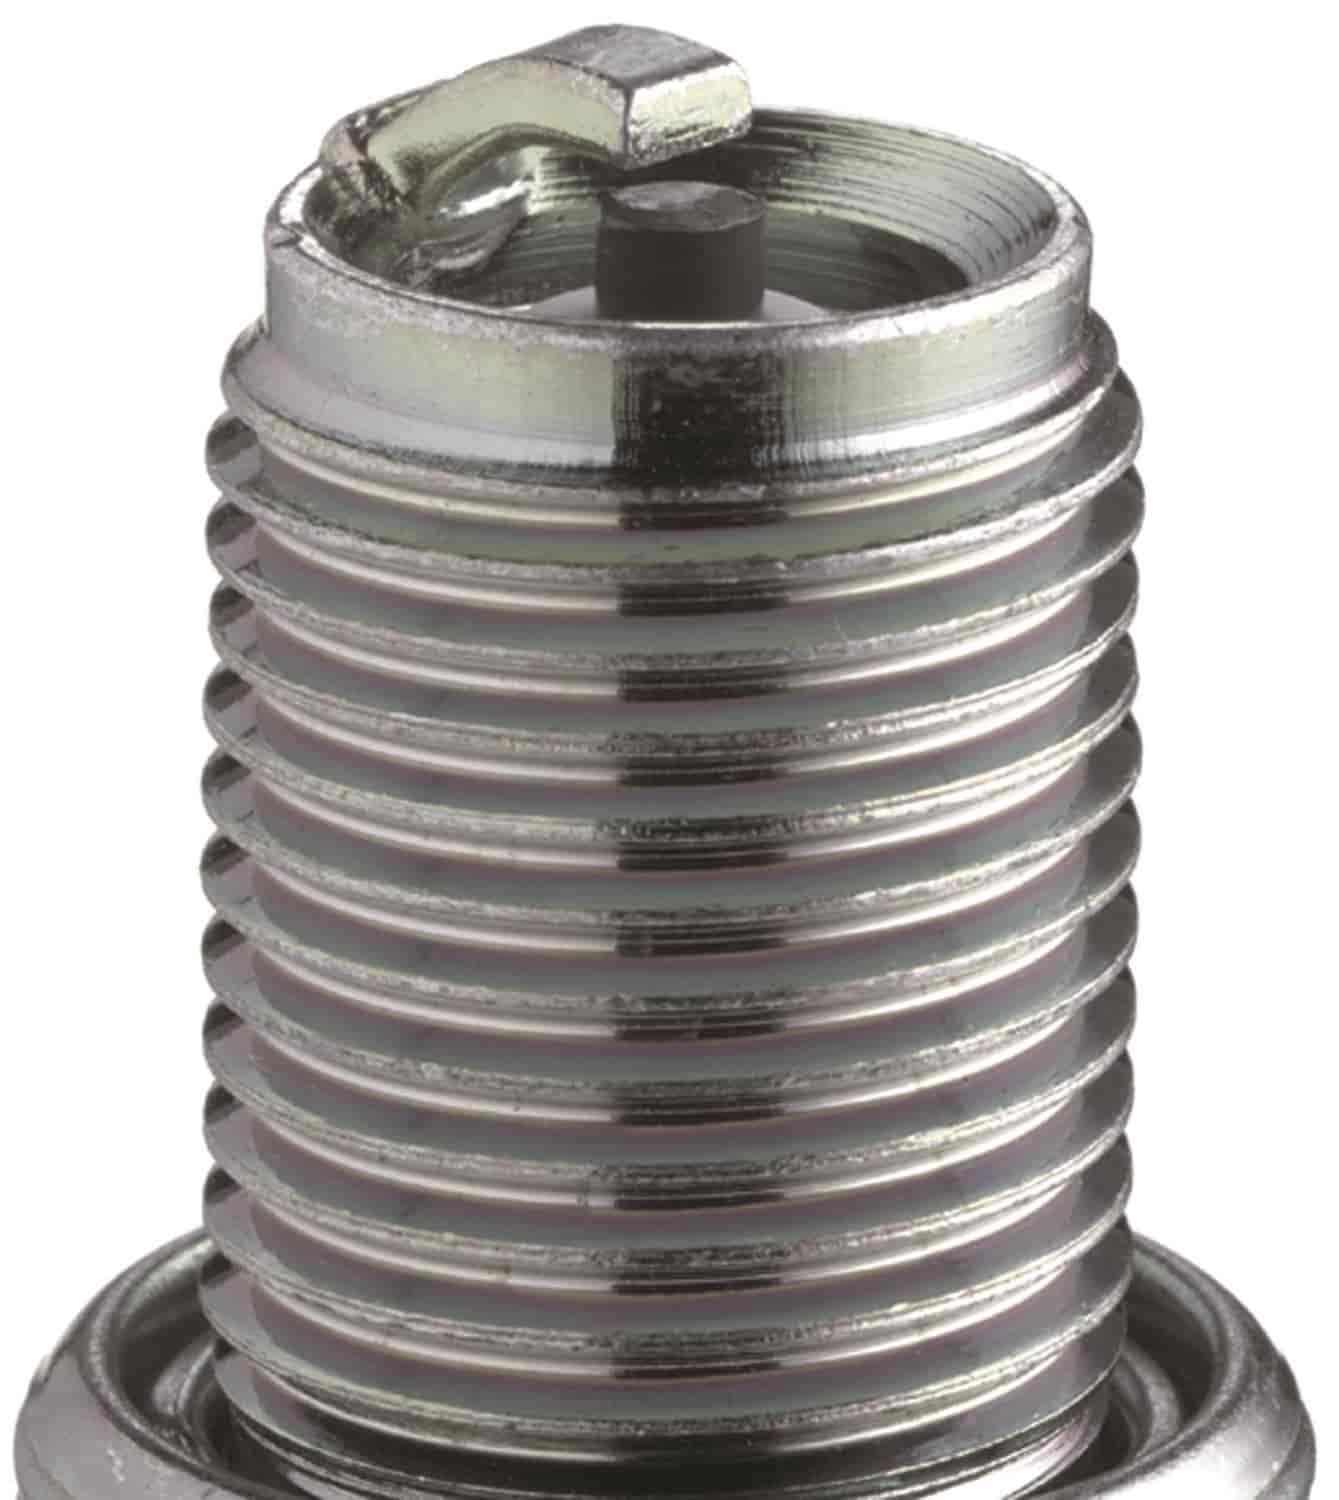 Standard Spark Plug, 14 mm. Thread, .750 Reach